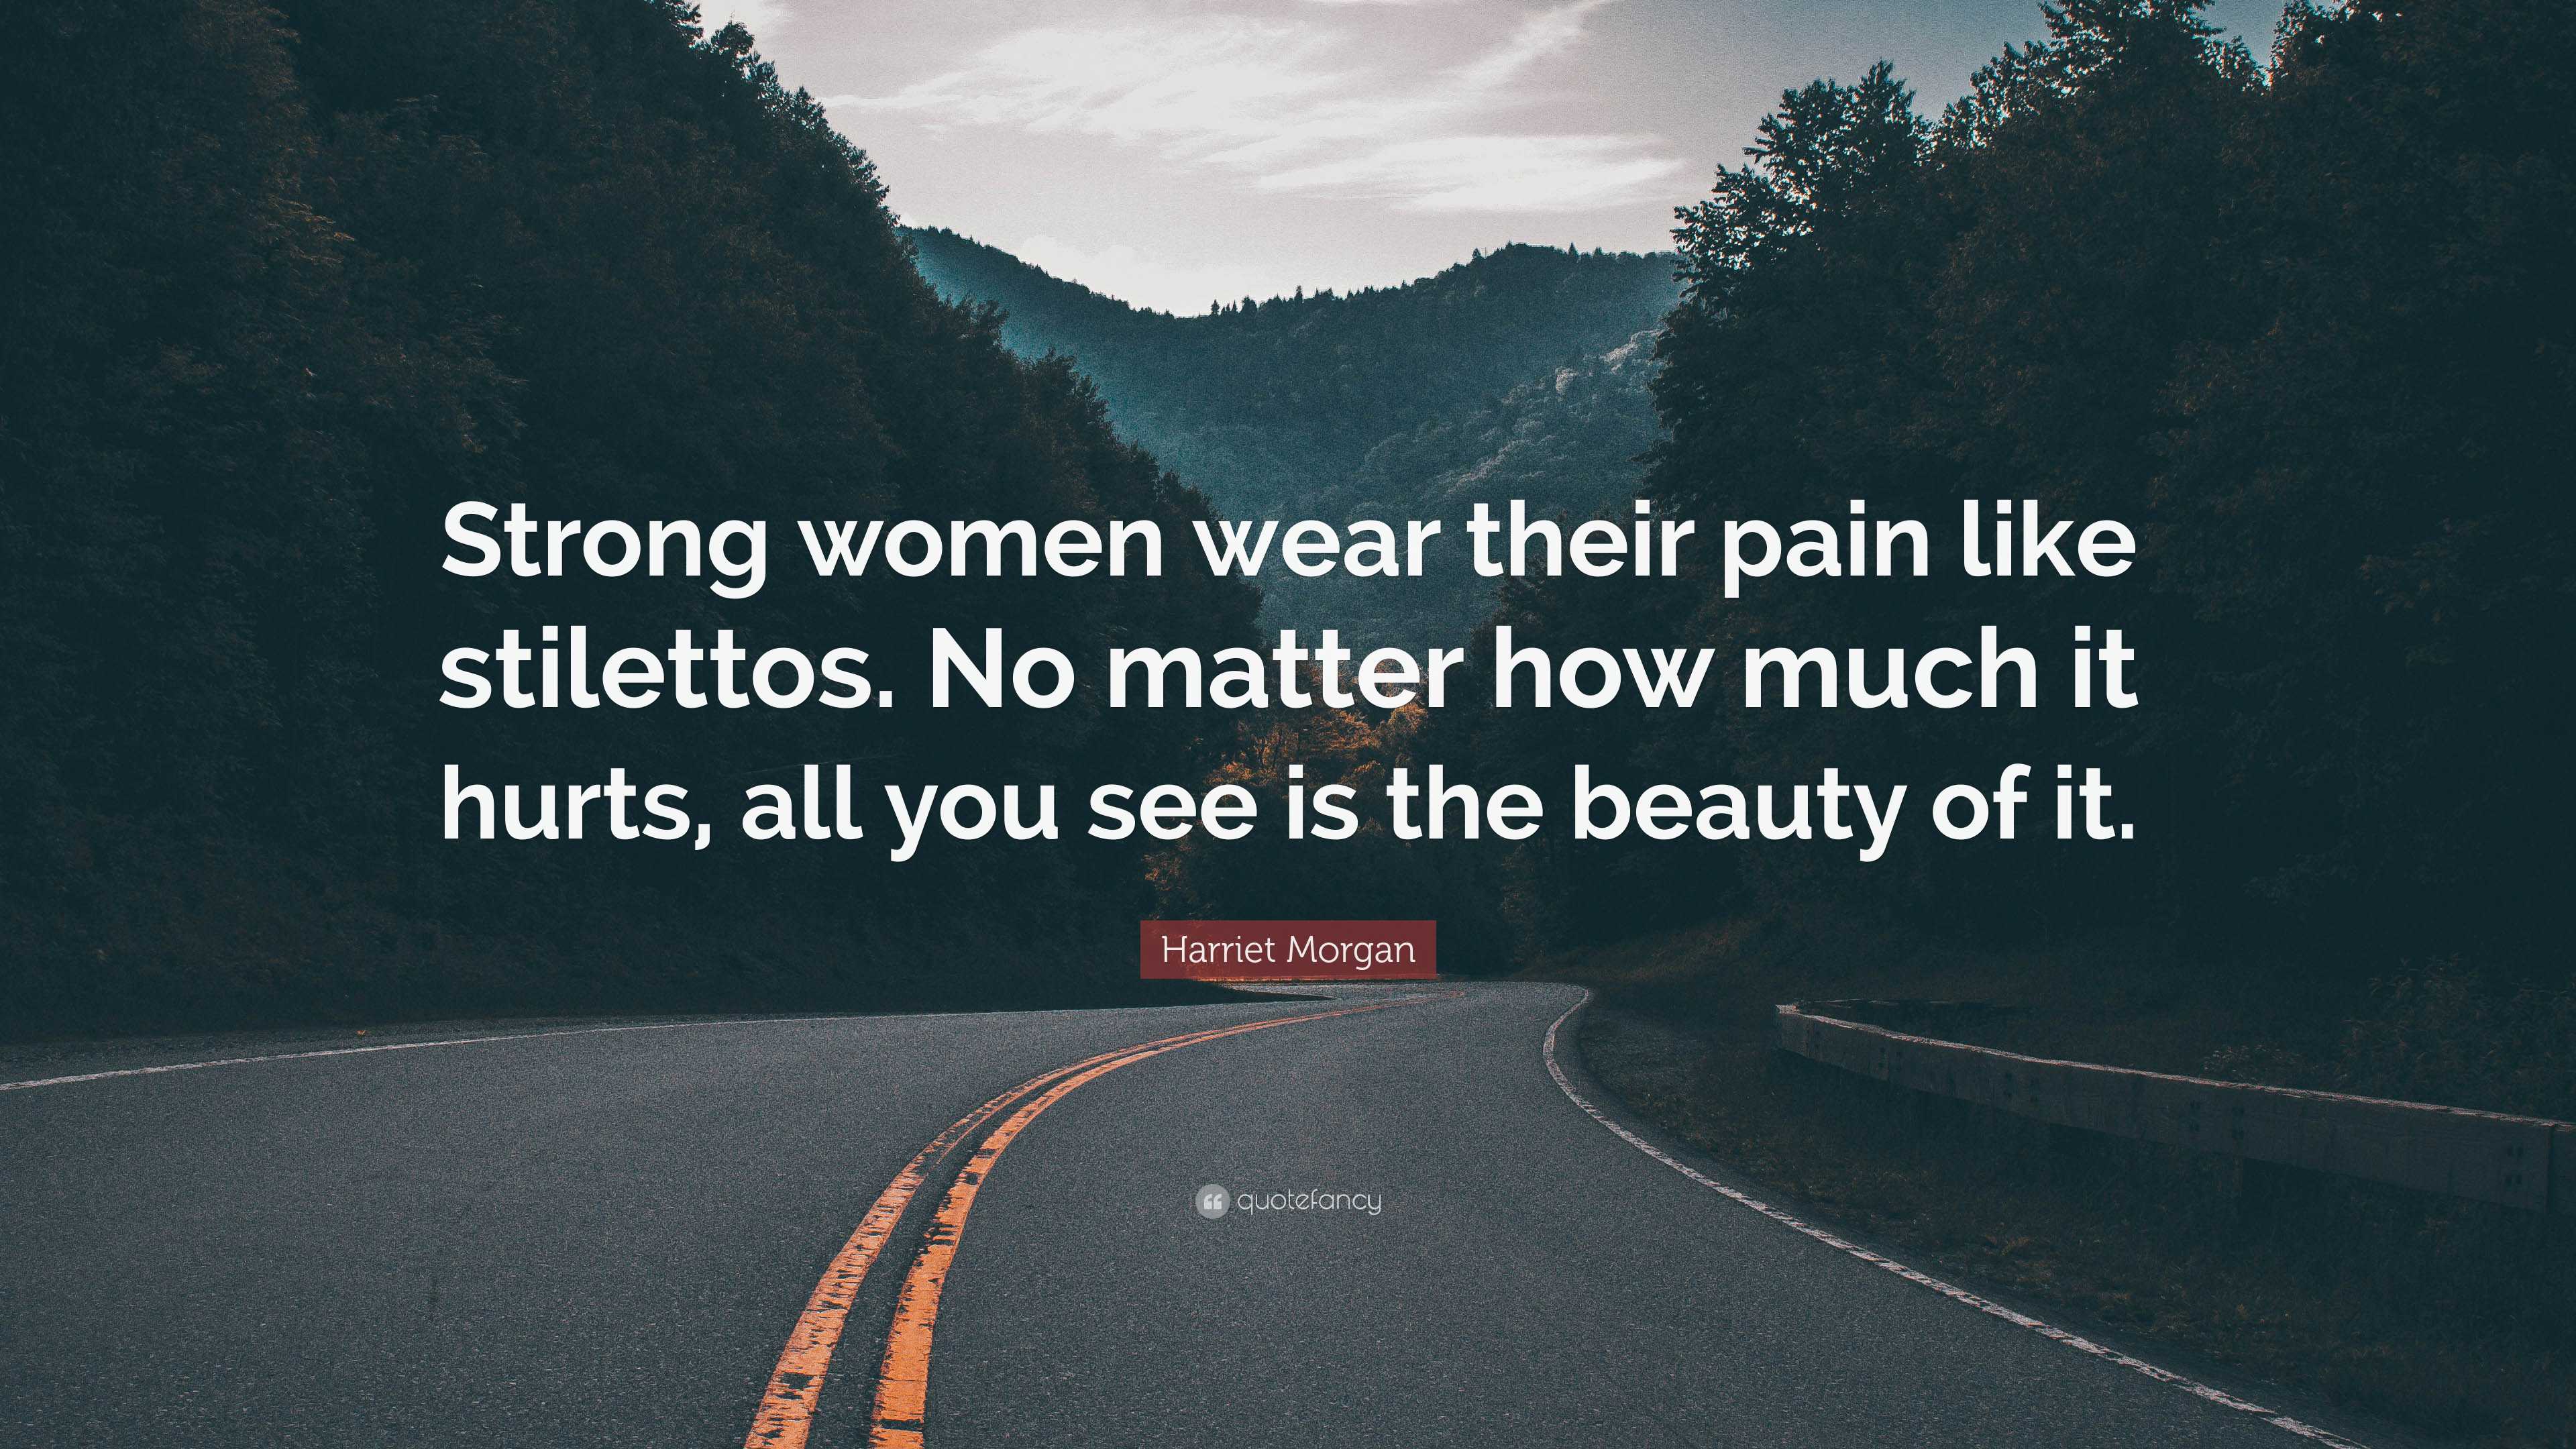 Harriet Morgan Quote: “Strong women wear their pain like stilettos. No ...